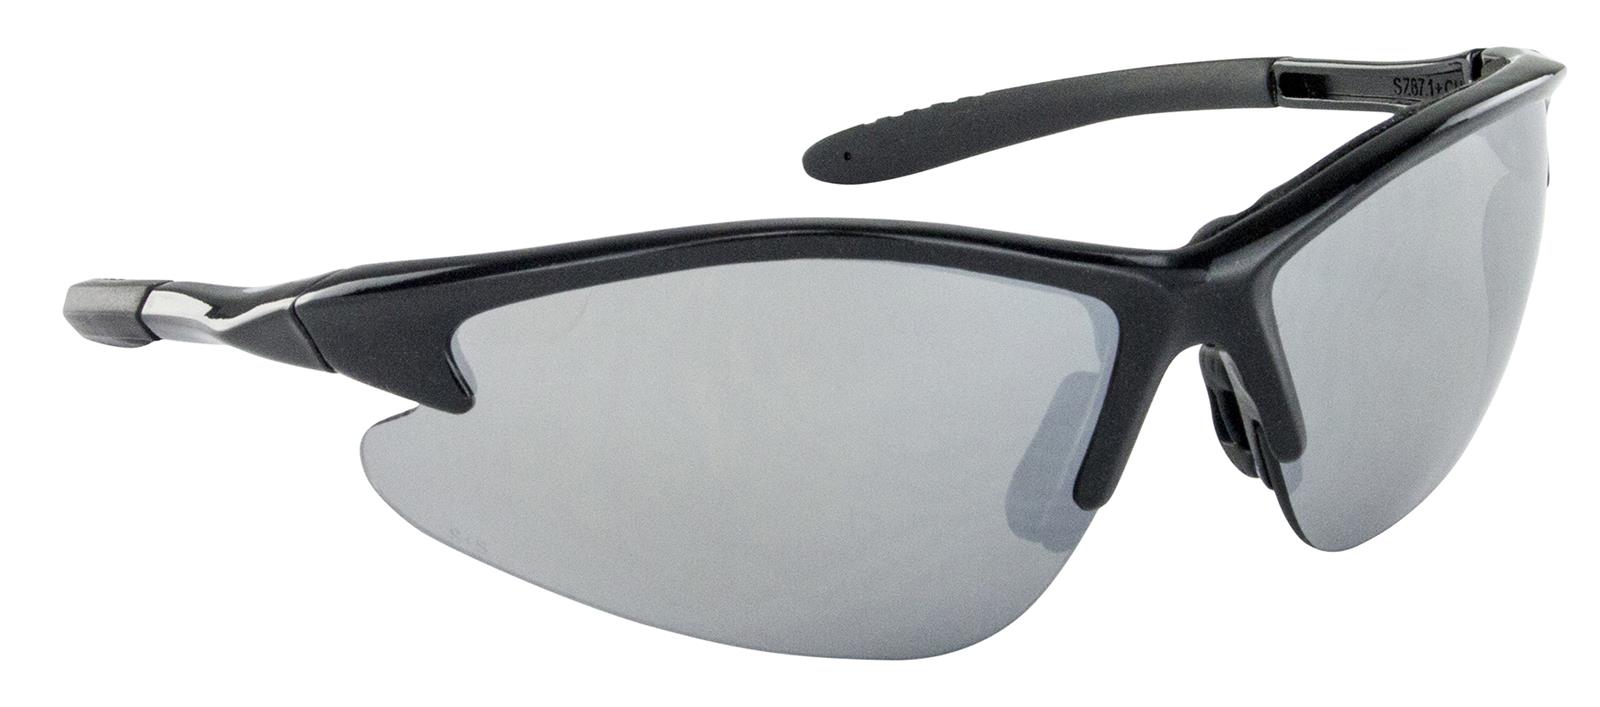 Sas Diamondbacks Safety Glasses Safety Gear Pro